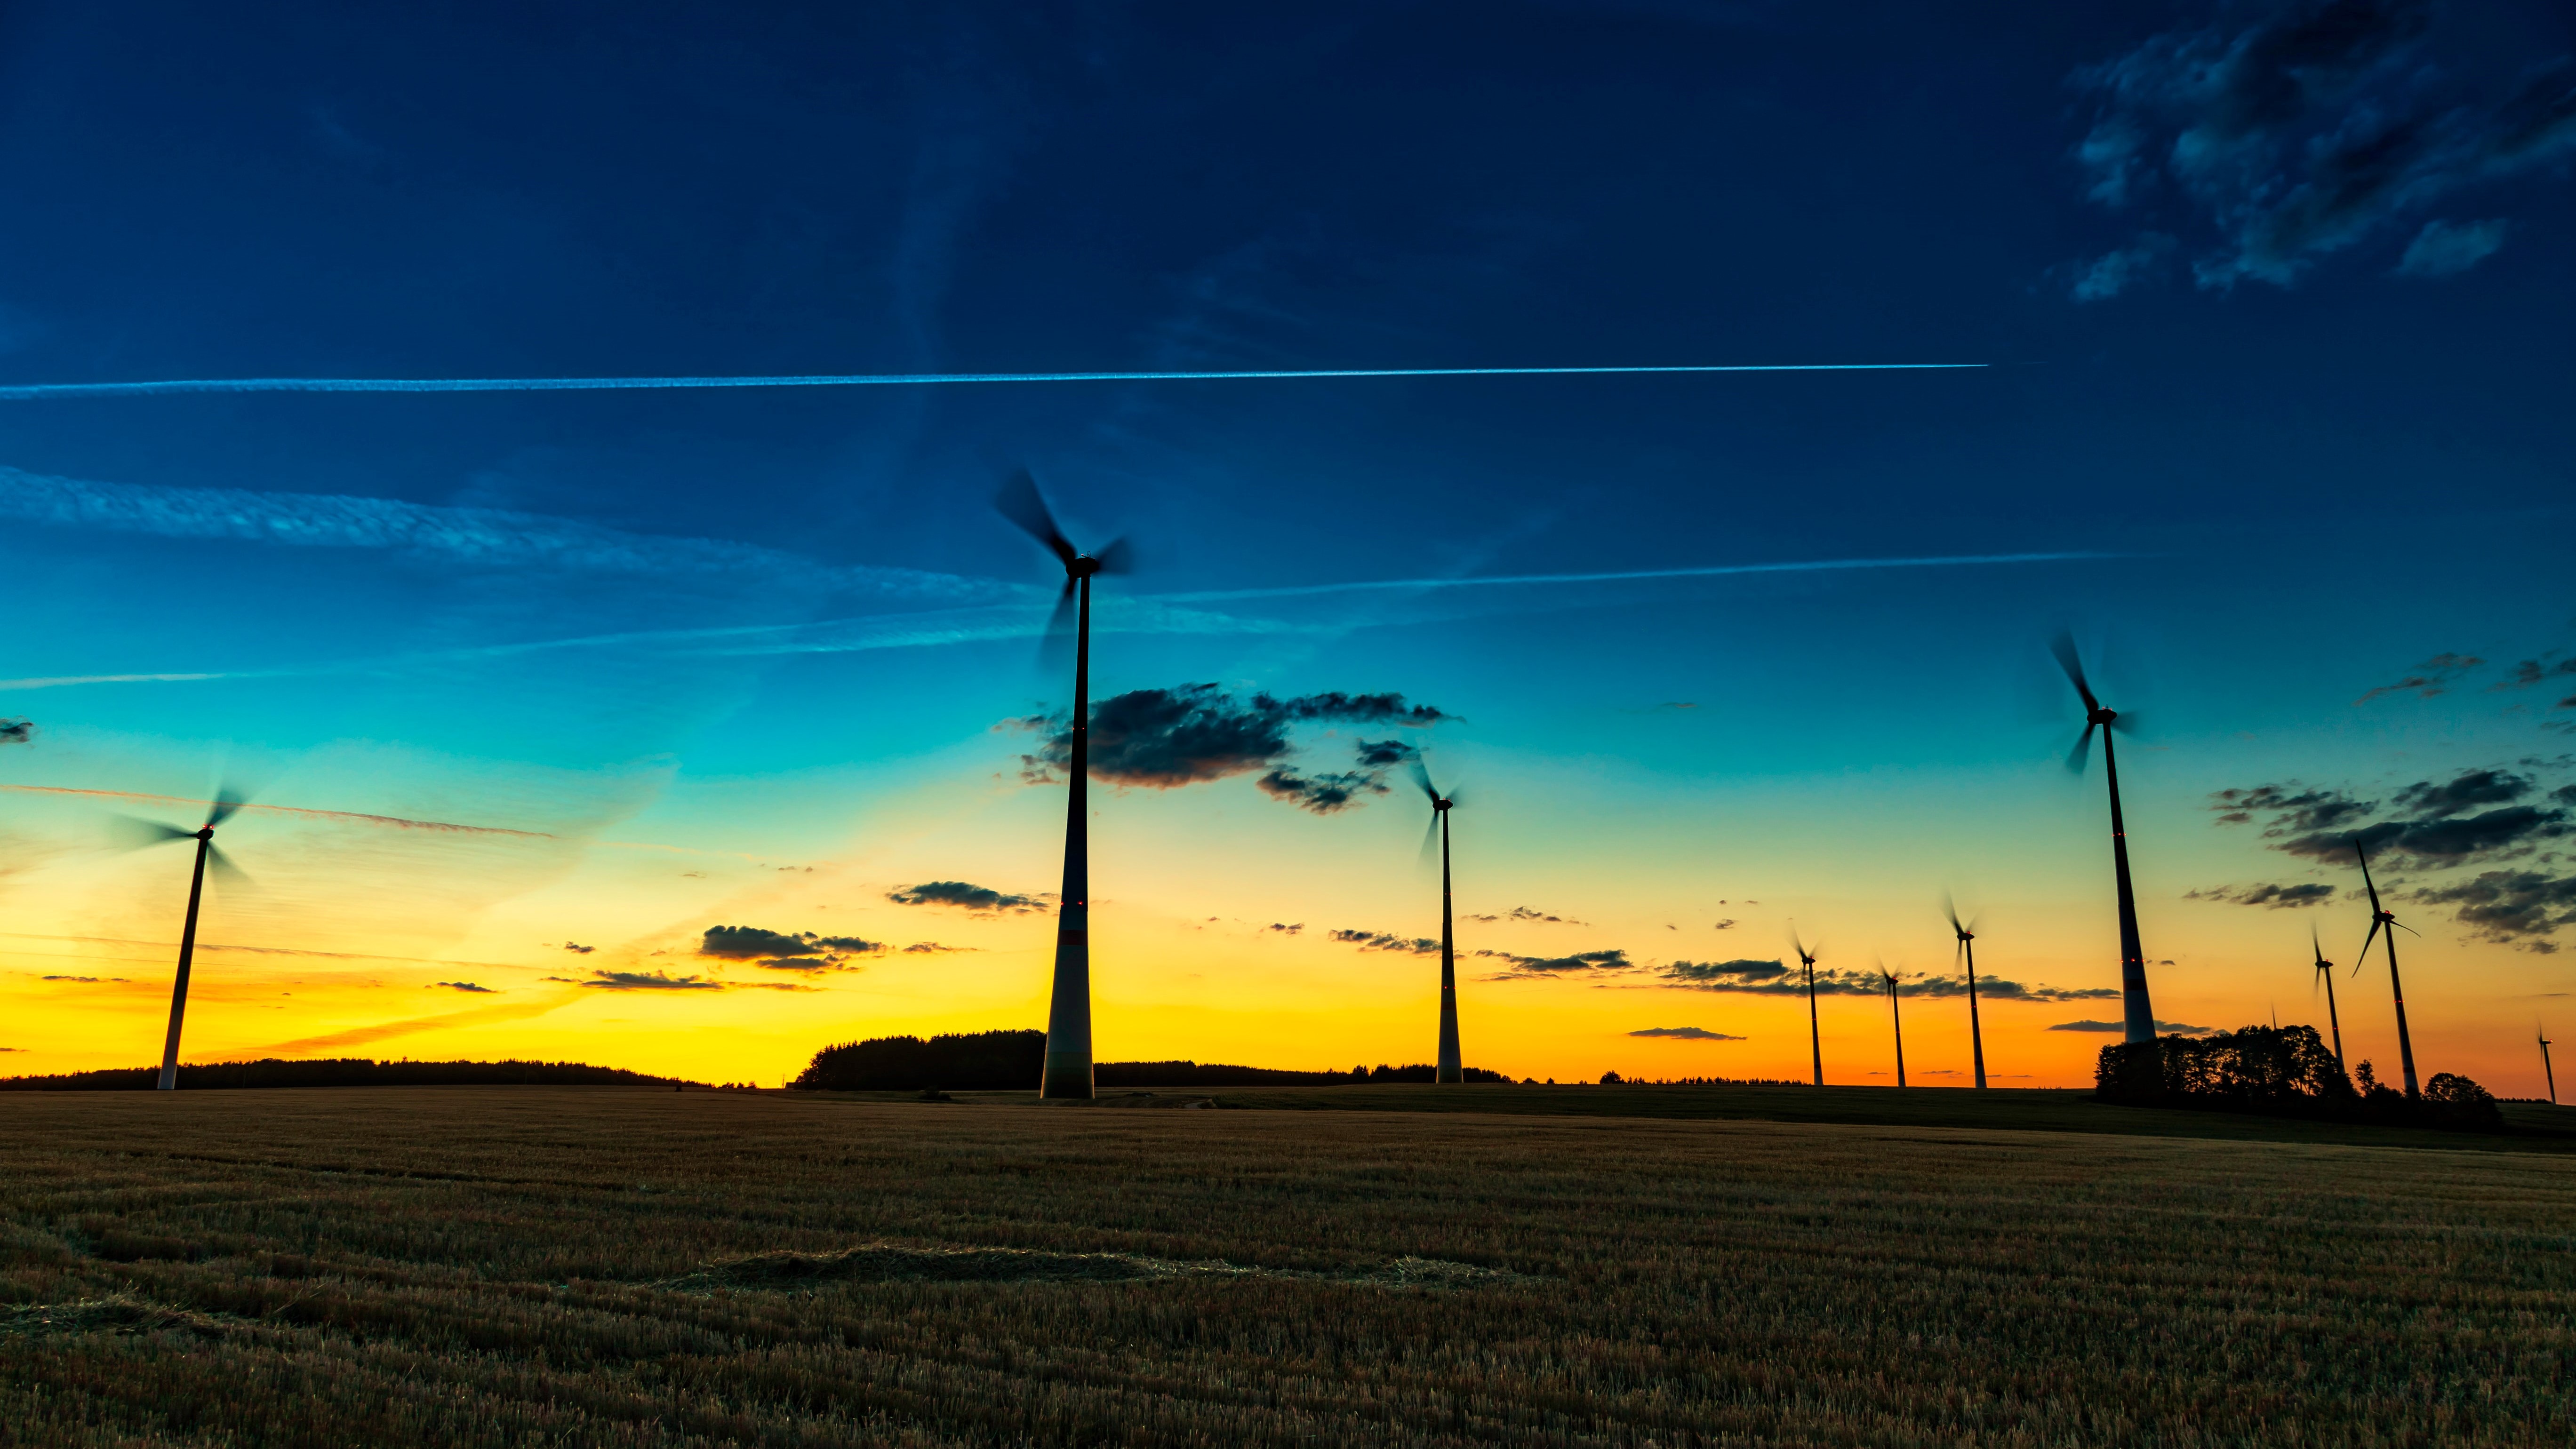 The image shows windmills at sundown